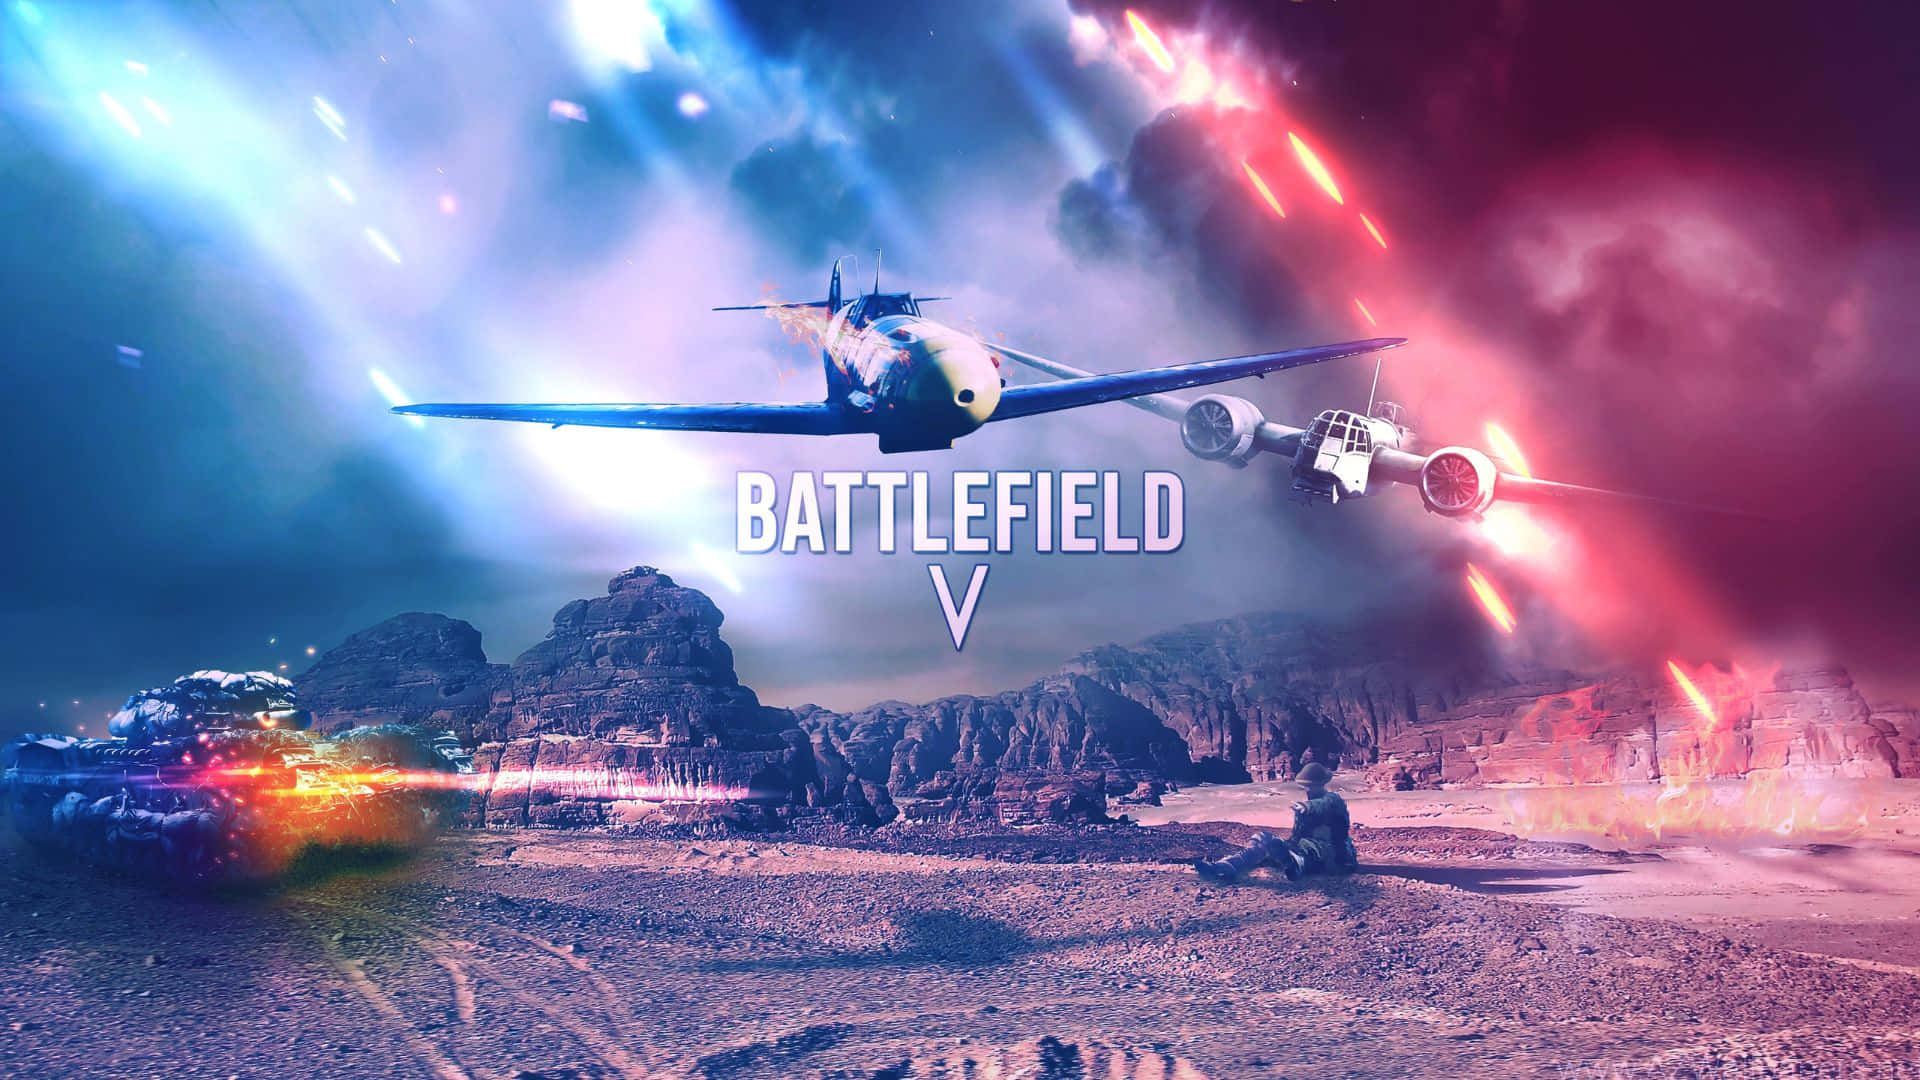 1080p Battlefield V Background Wallpaper